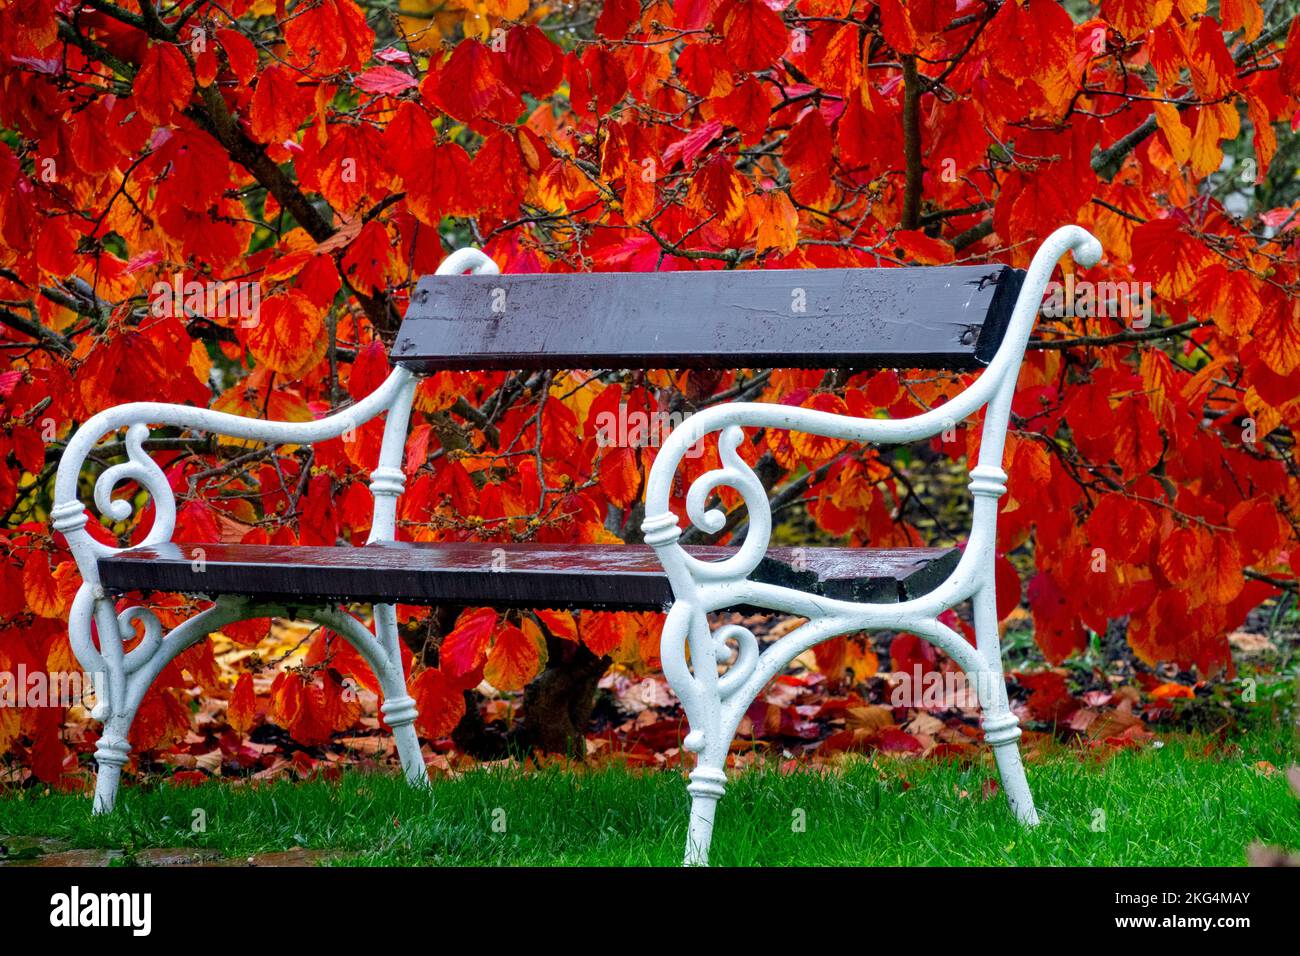 Metal garden bench in Autumn, Garden, Red, Witch hazel, Turning, Hamamelis, Foliage Stock Photo